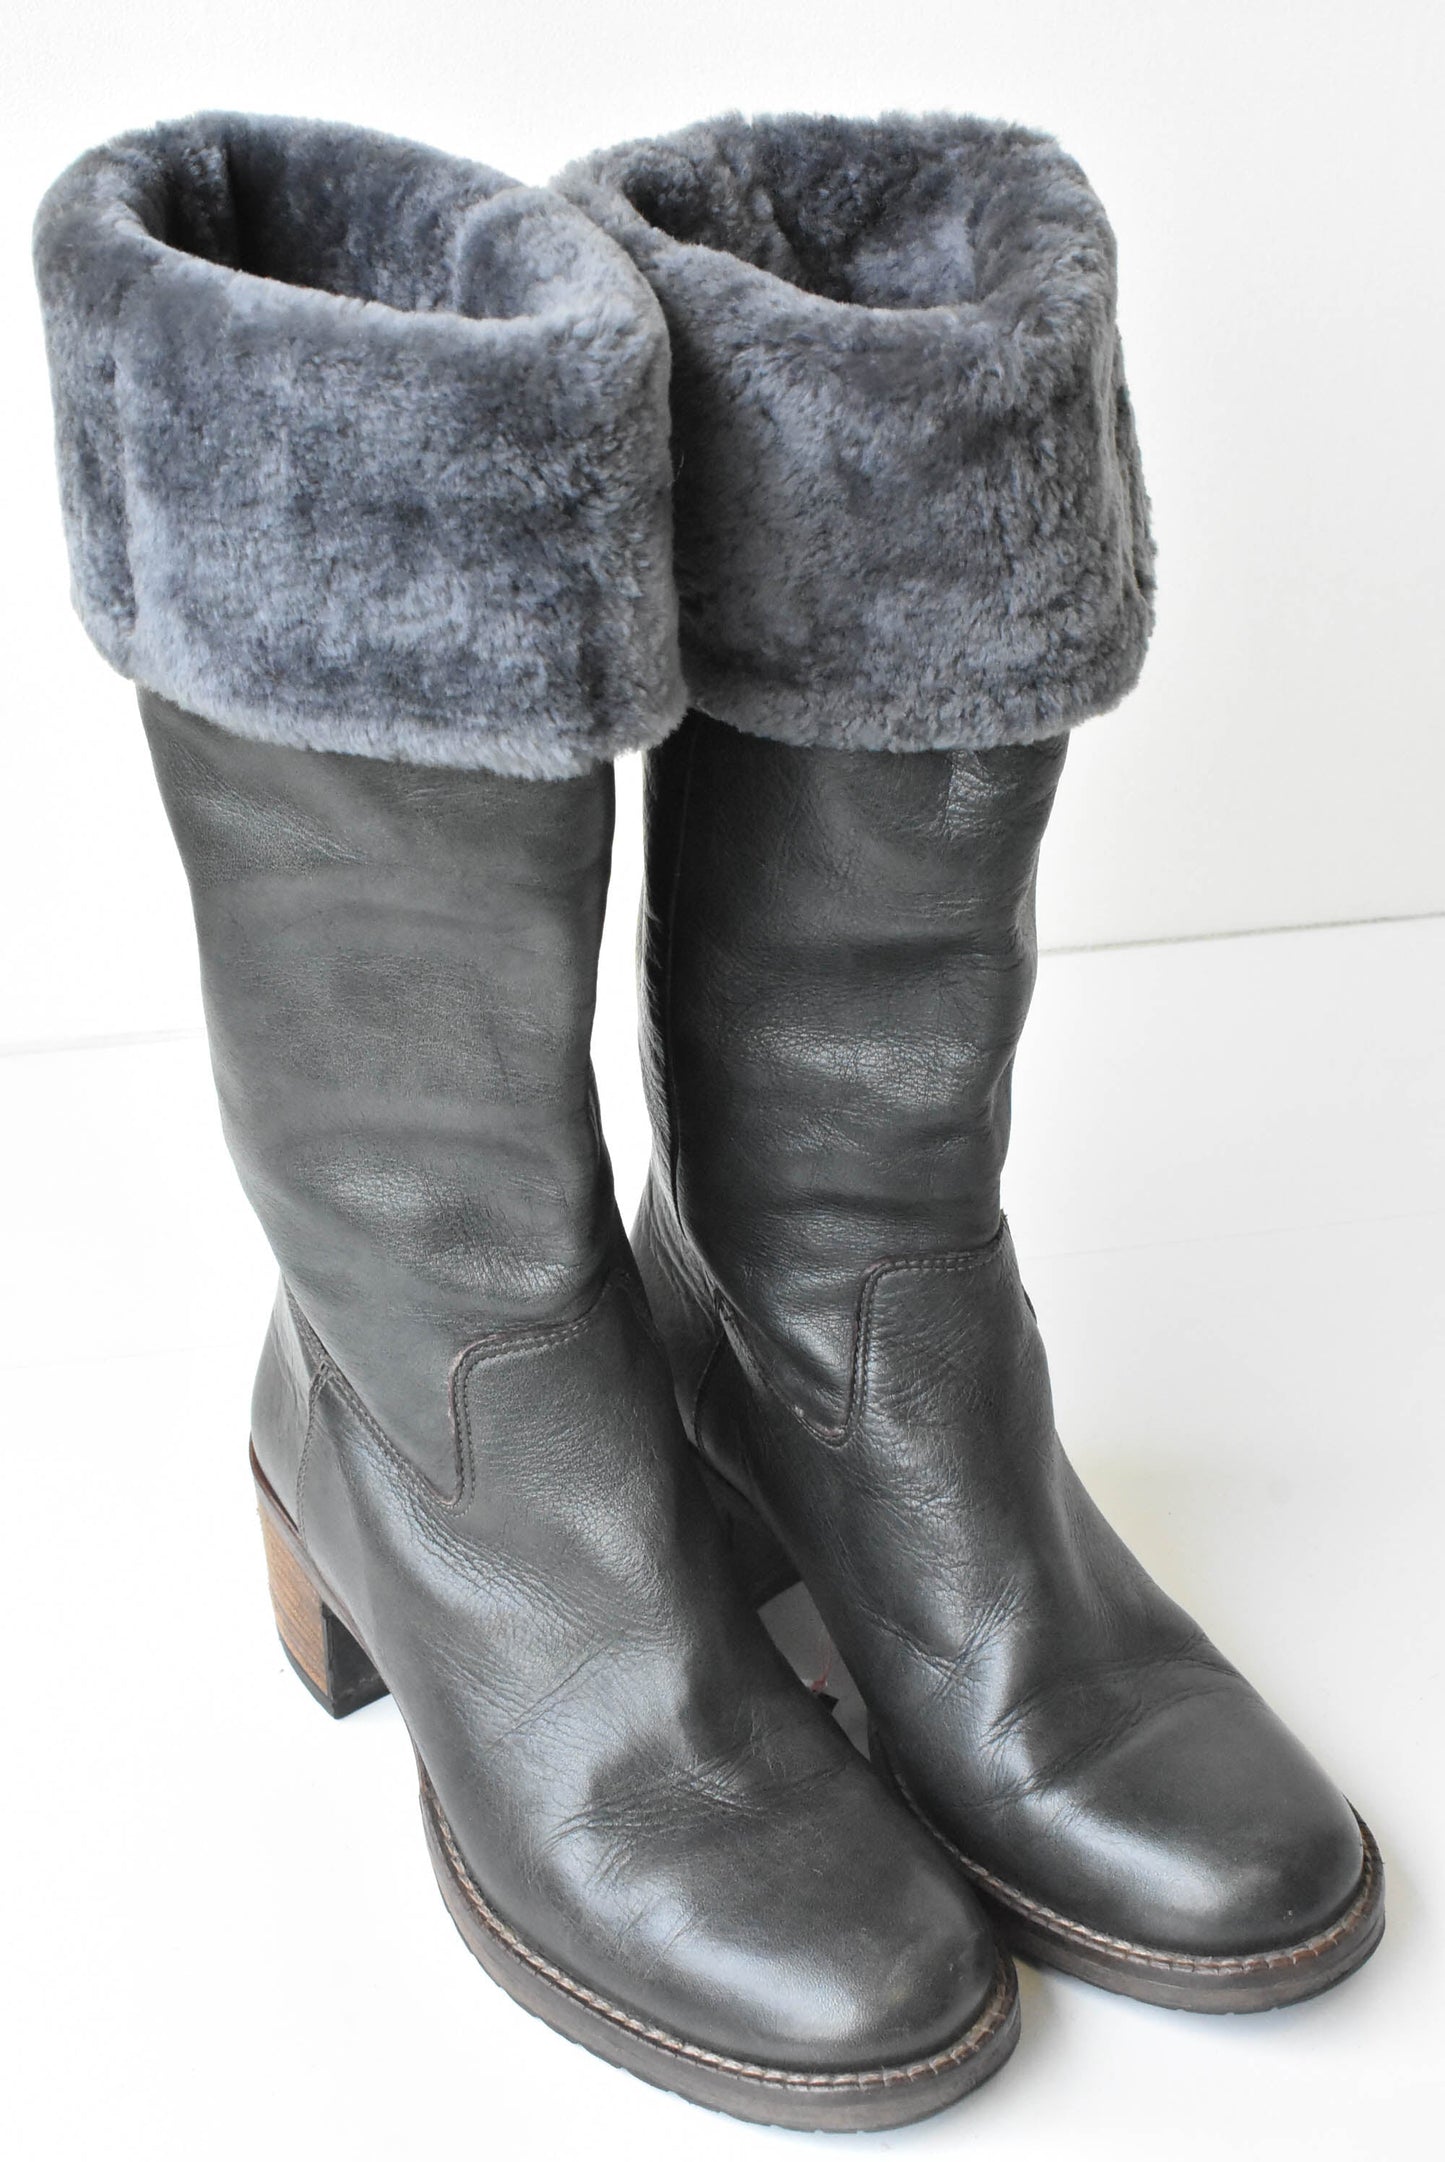 Marco  Ferretti Leather Boots Size 37